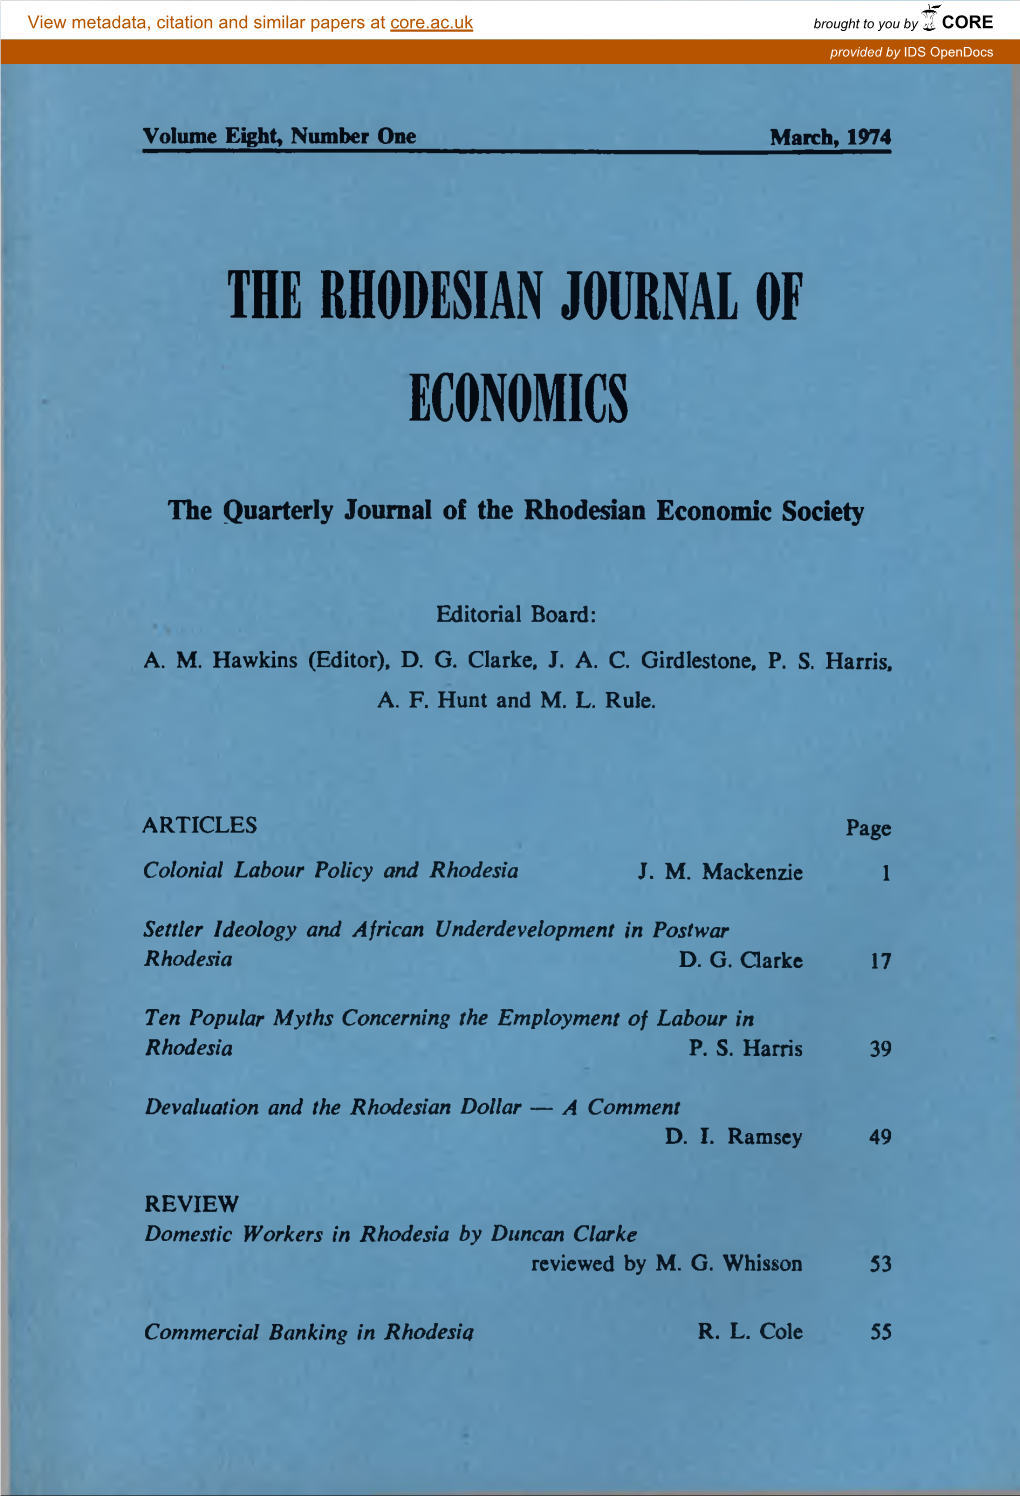 The Rhodesian Journal of Economics